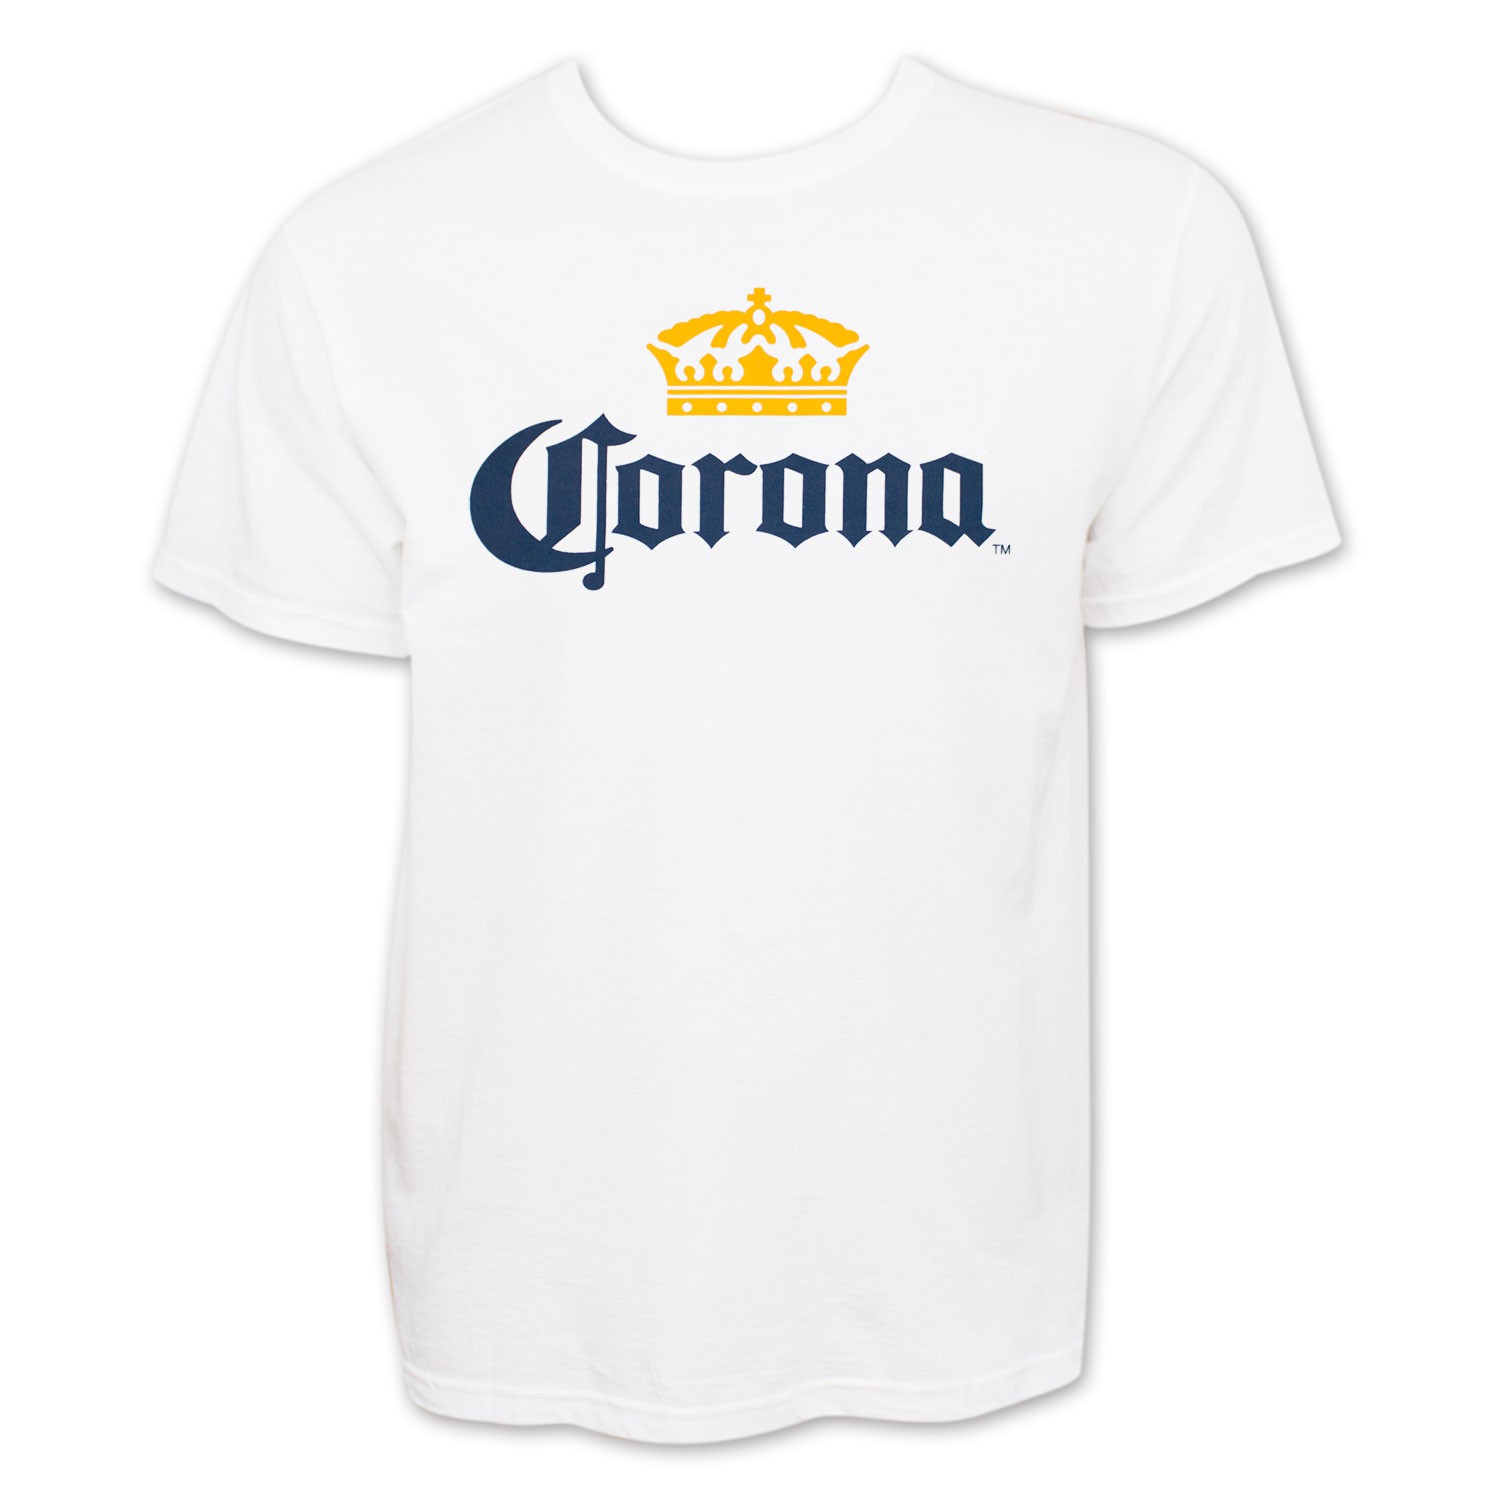 Corona Extra Original Logo Cerveza Beer Alcohol Men's T Shirt BIG & TALL SIZES 